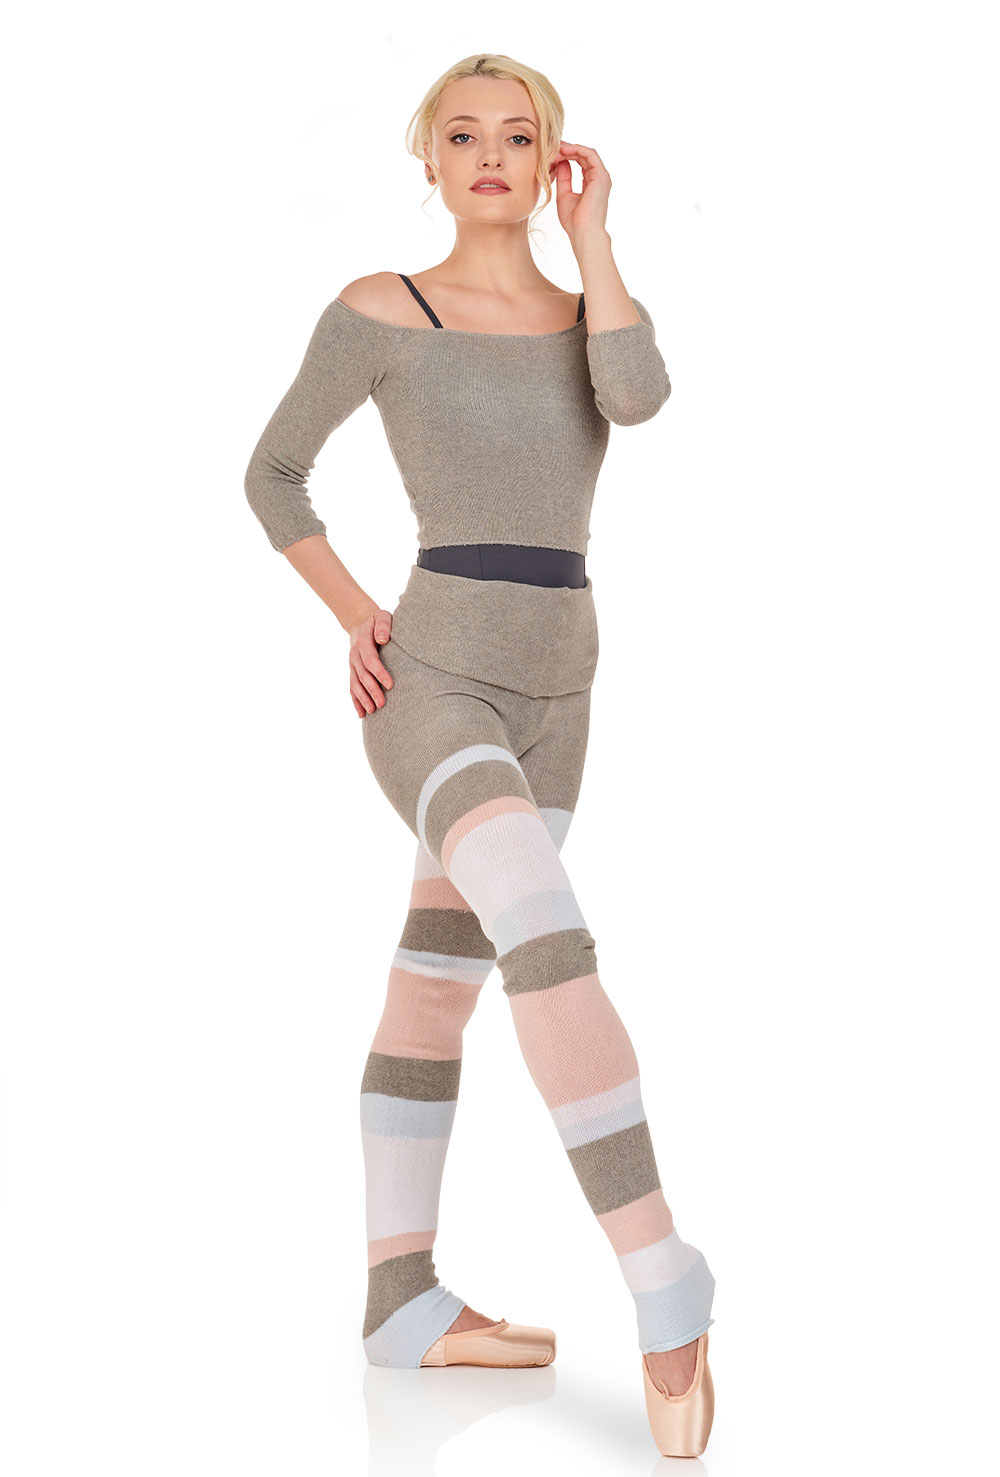 Intermezzo Panlongband- Striped Knit Warm-Up Pants 5301 - Porselli Dancewear